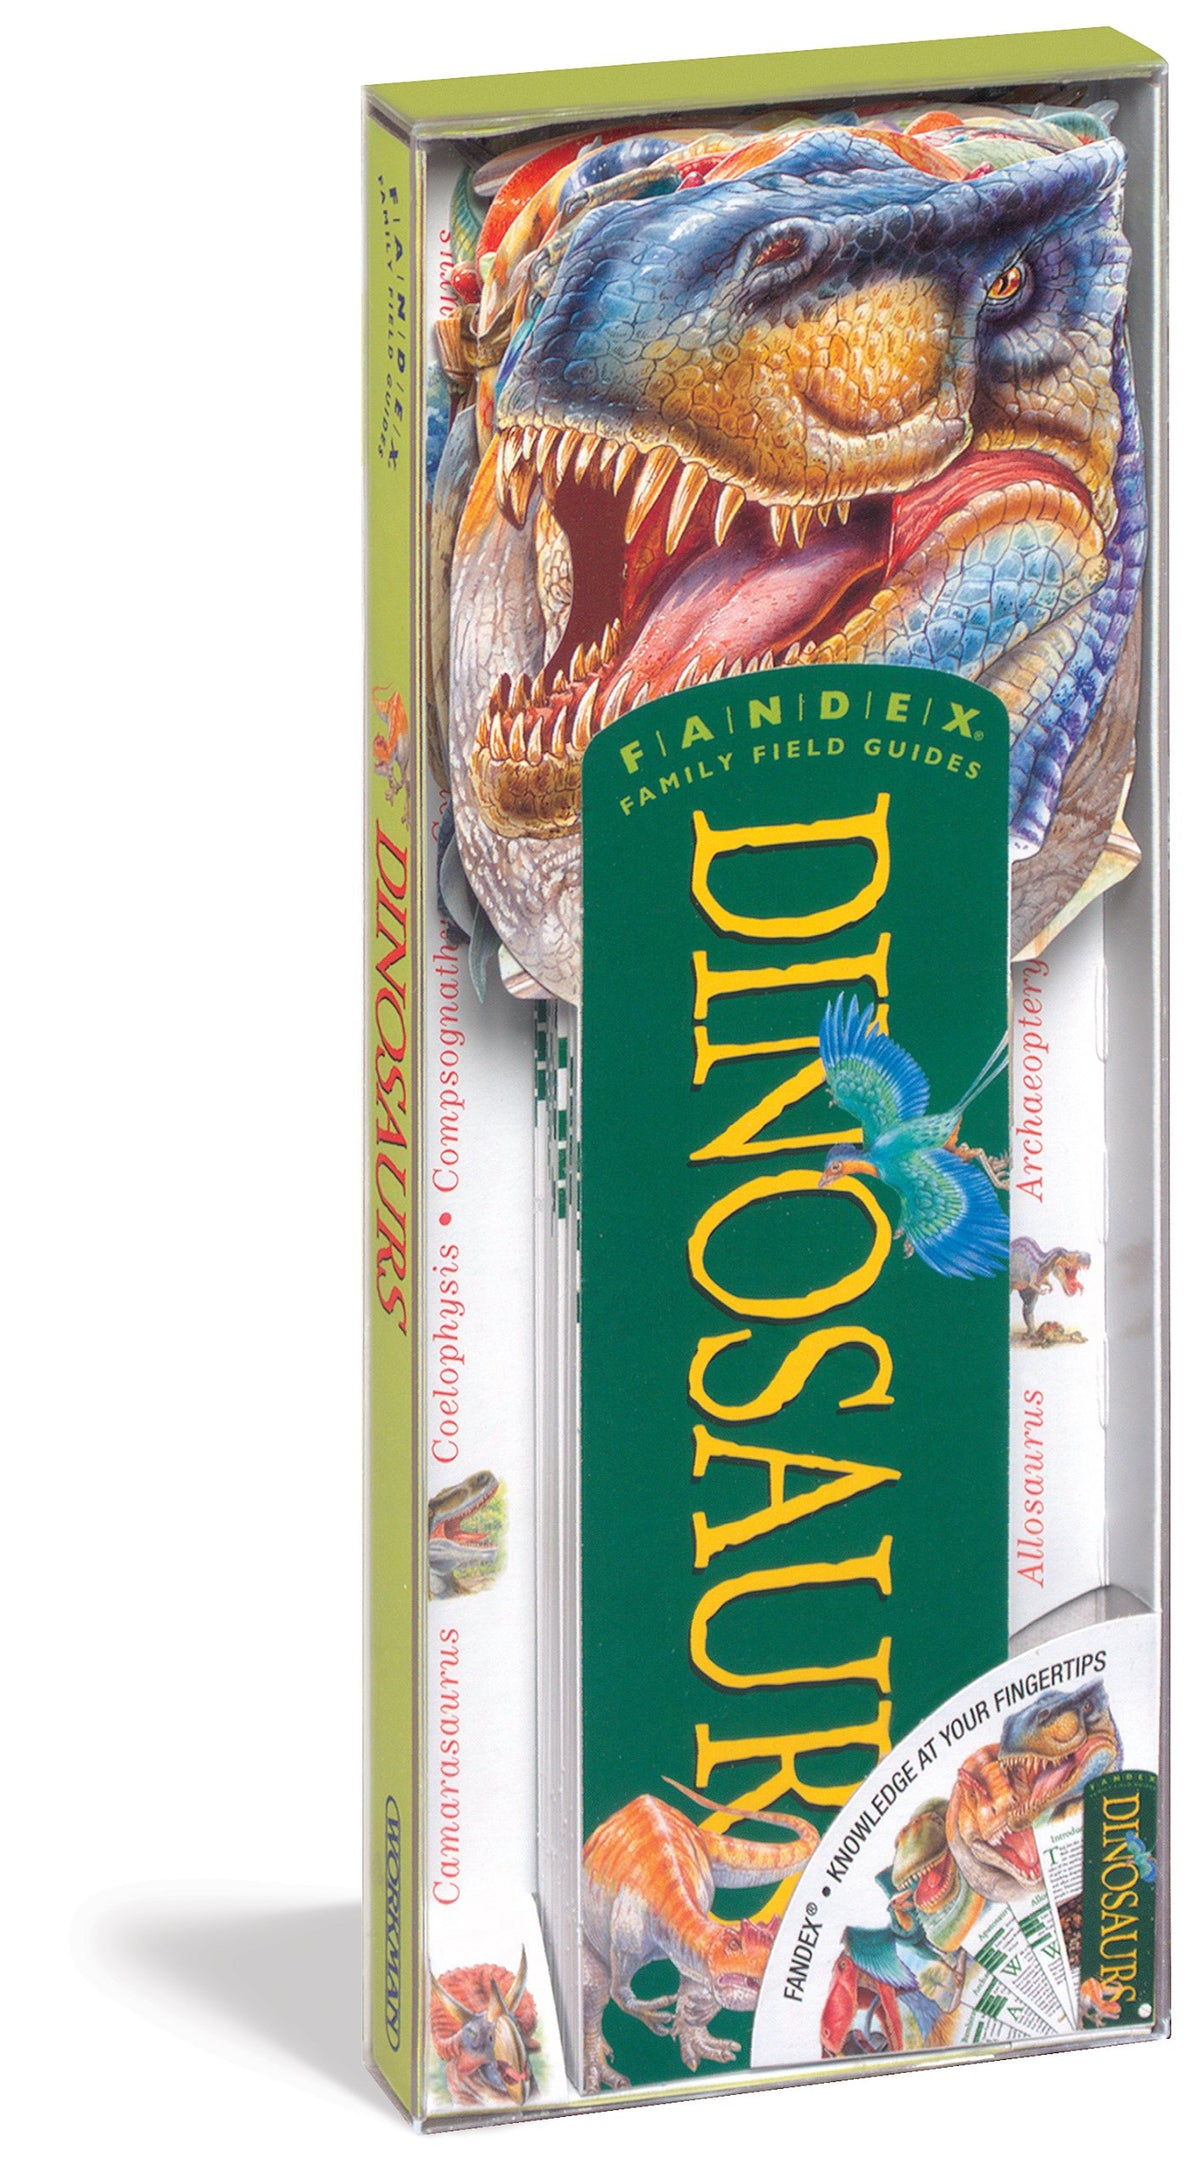 Fandex Family Field Guides: Dinosaurs